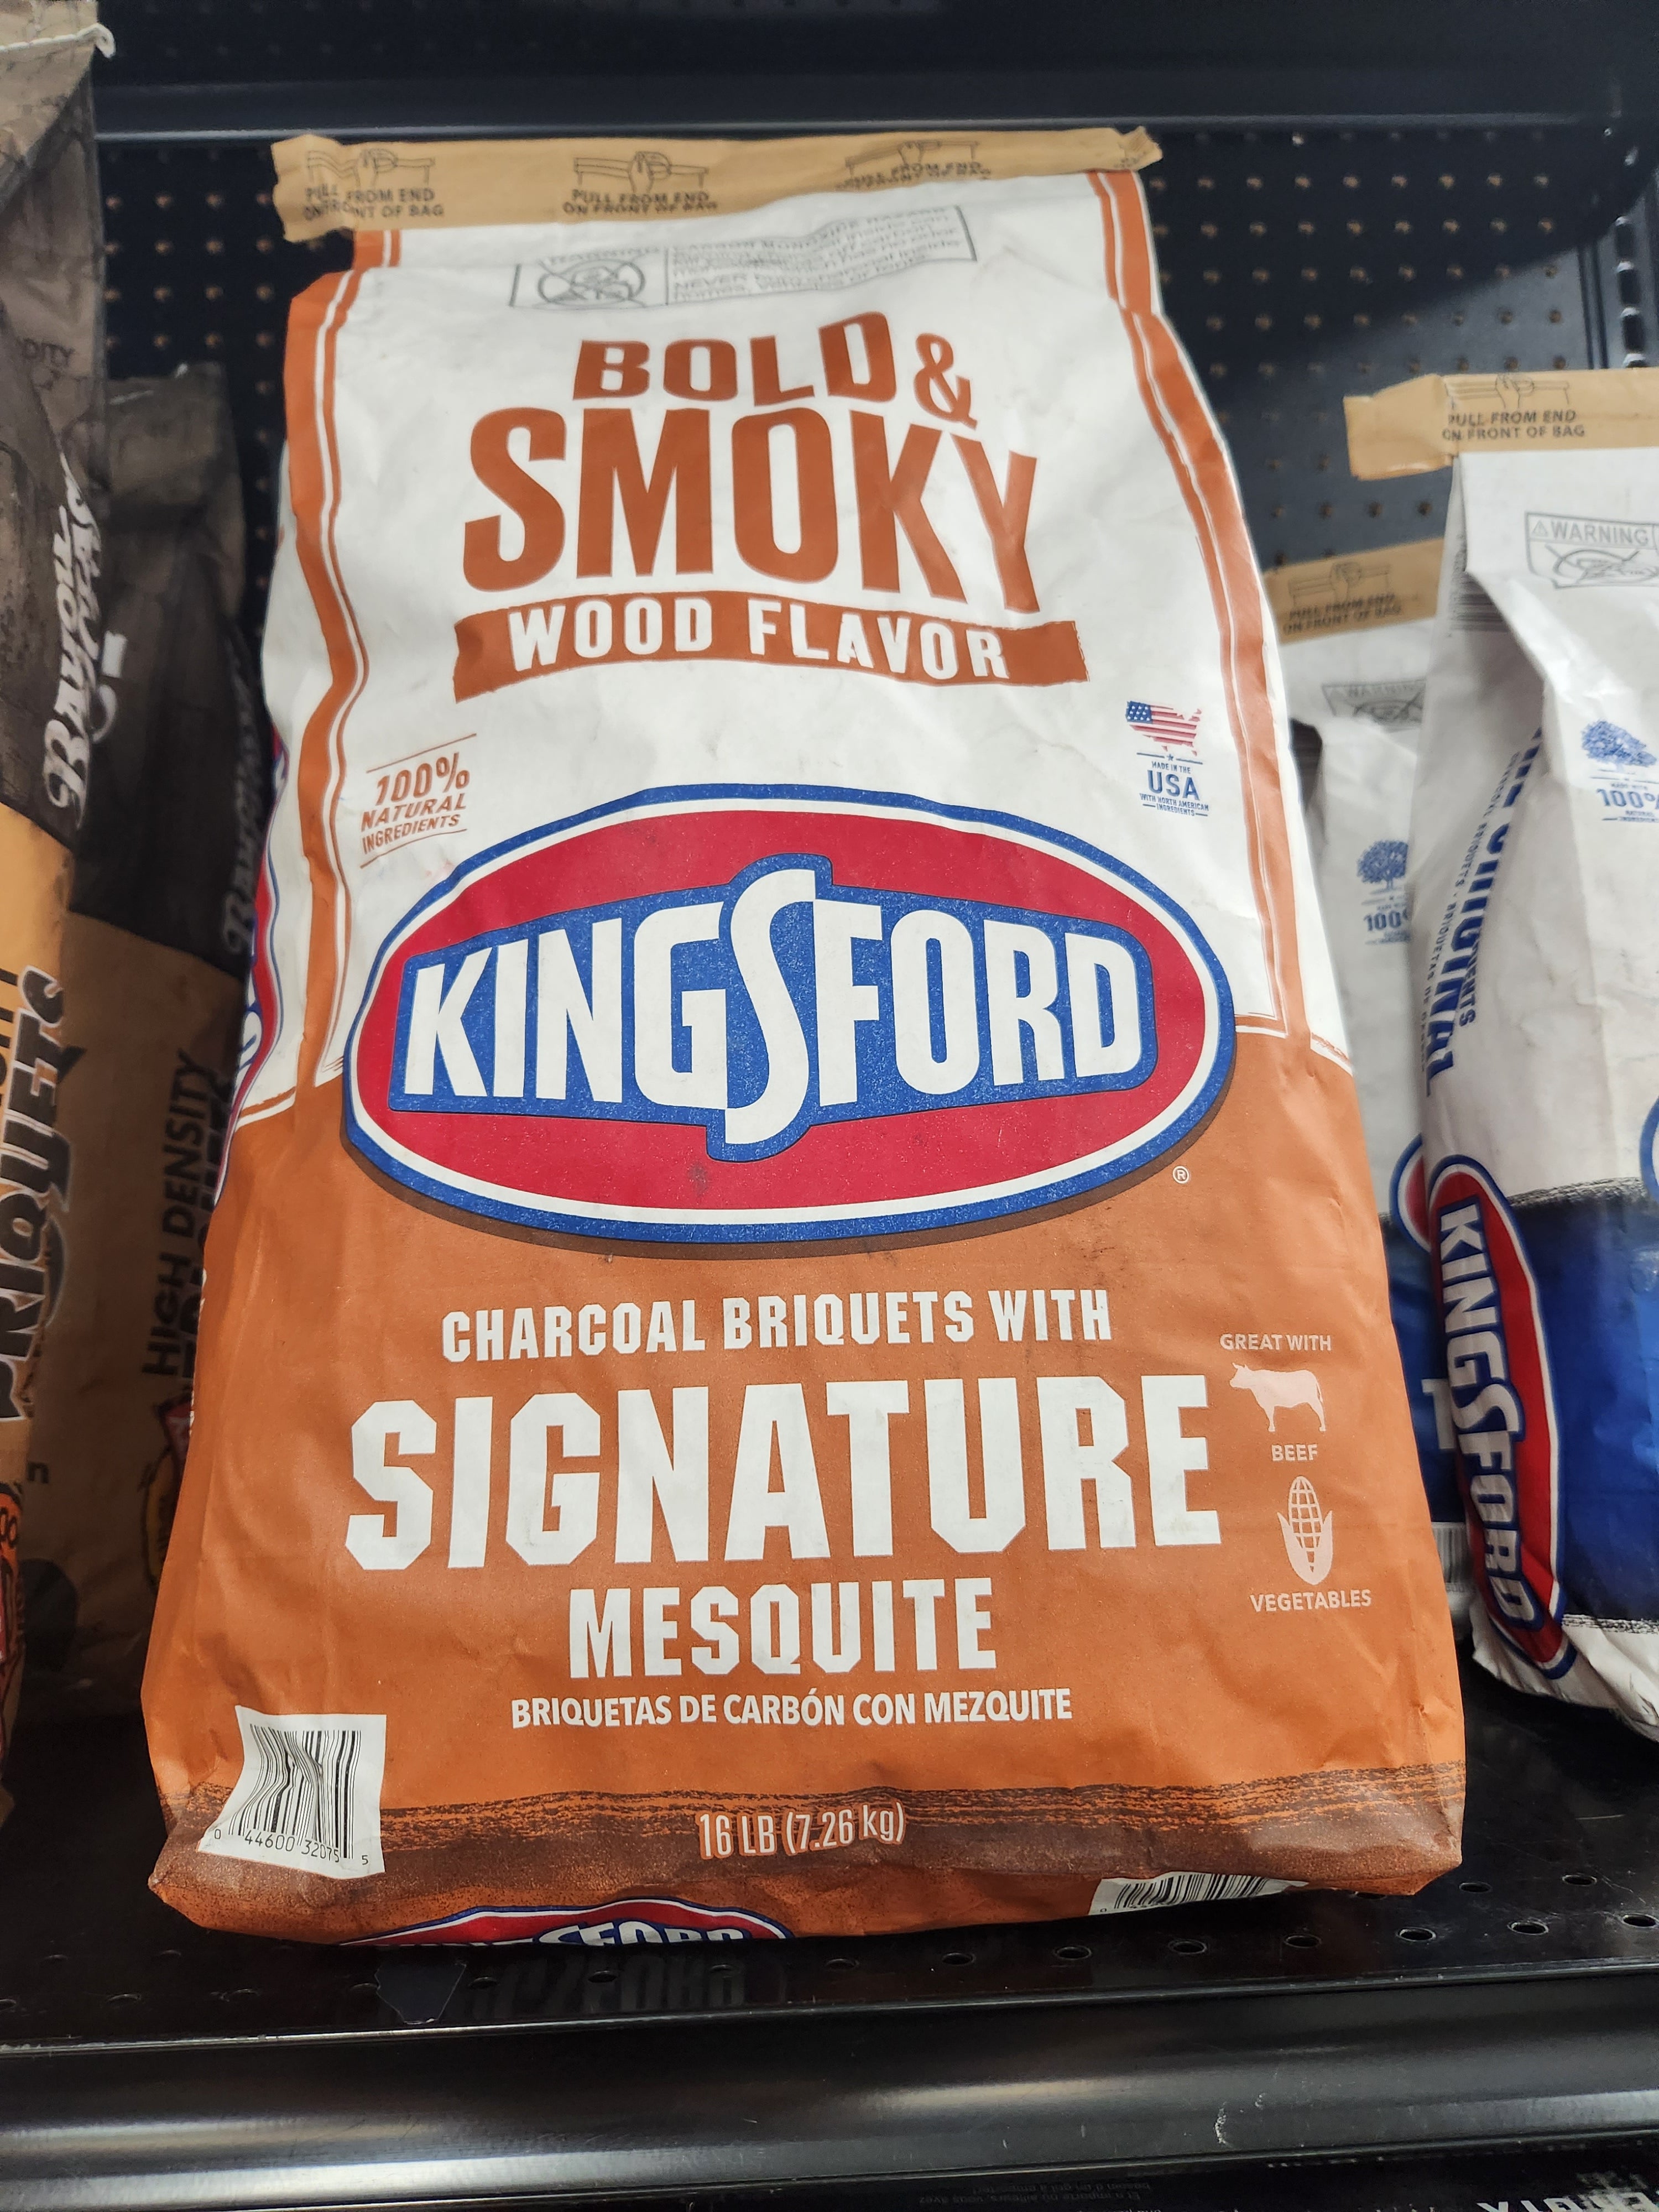 Kingsford Charcoal Bold & Smoky Wood Flavor (Signature Mesquite) - 16lb bag